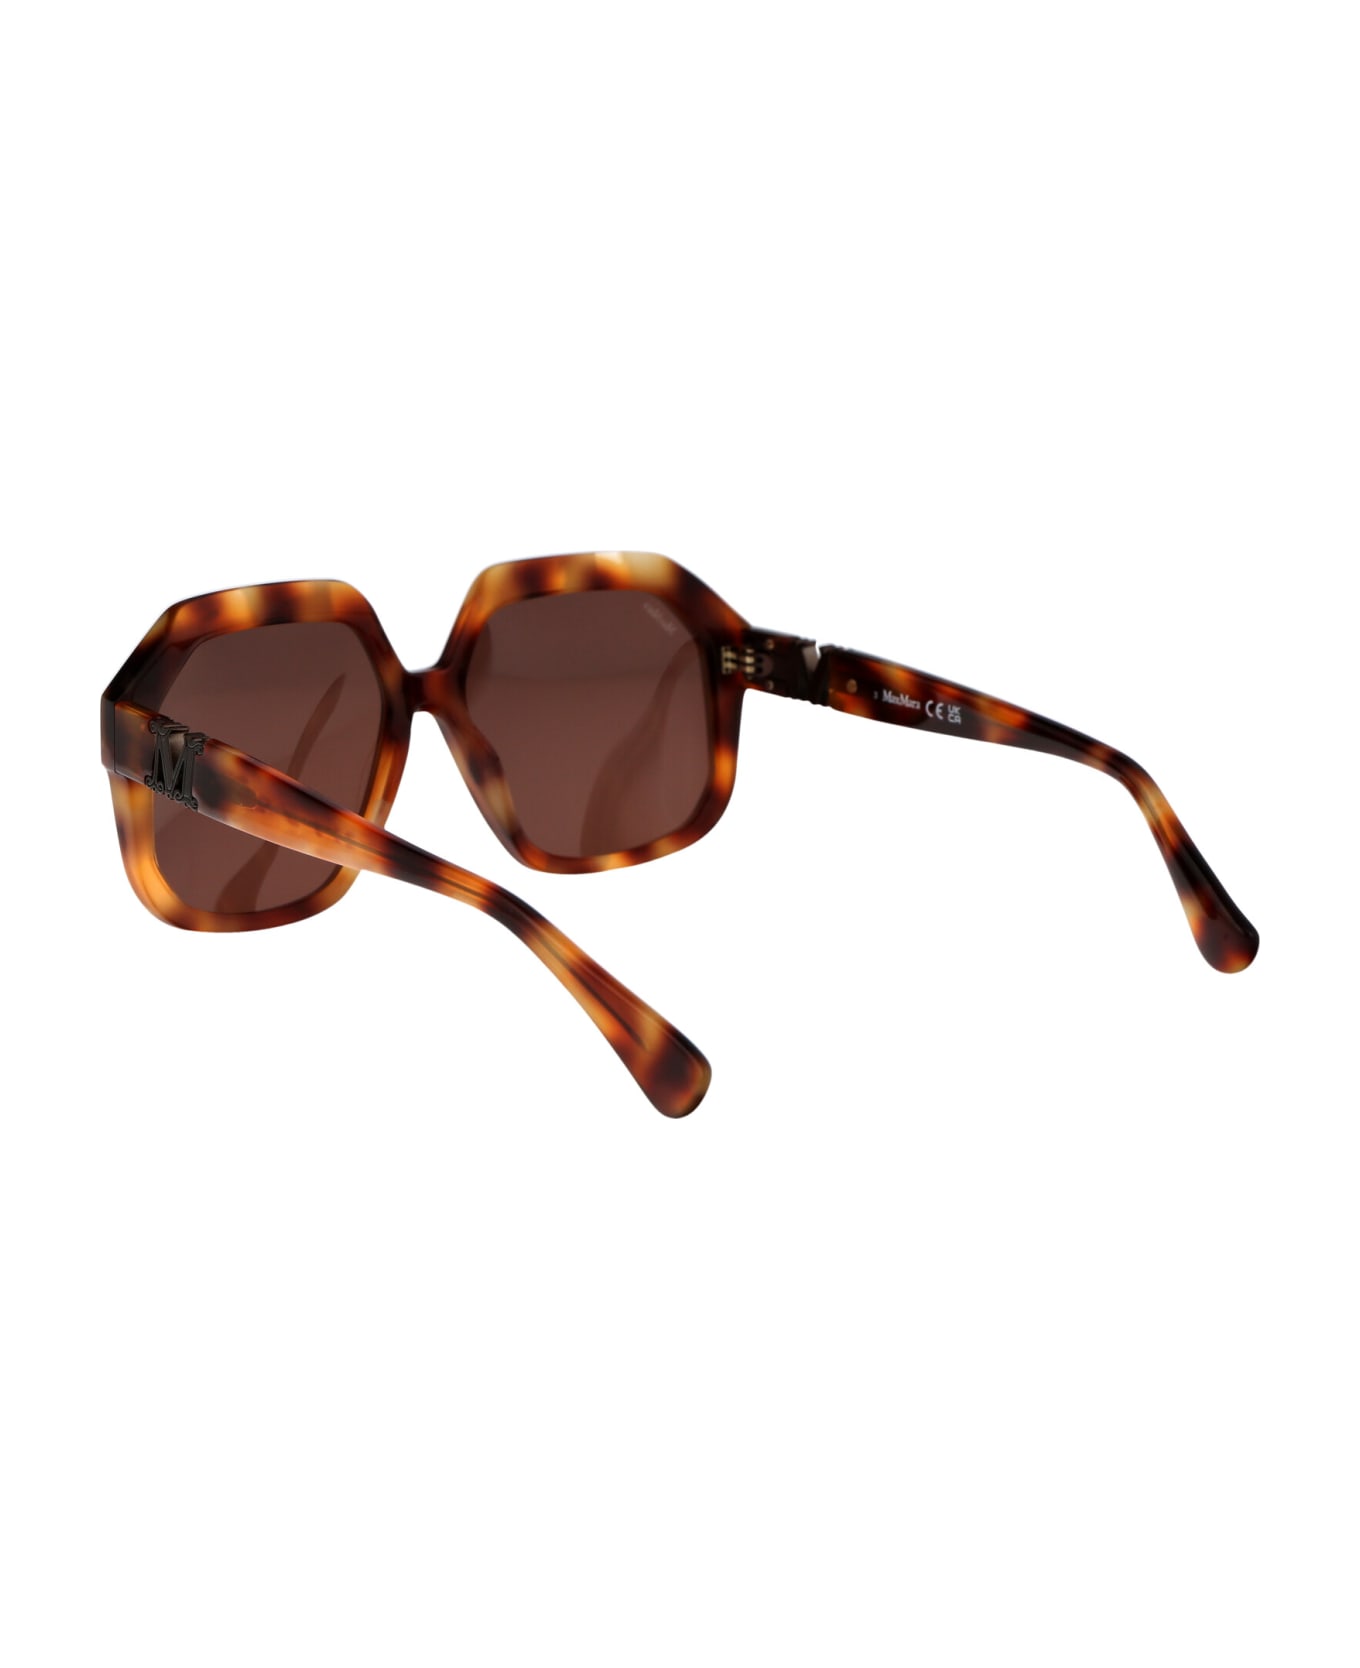 Max Mara Emme12 Sunglasses - 53E Avana Bionda/Marrone